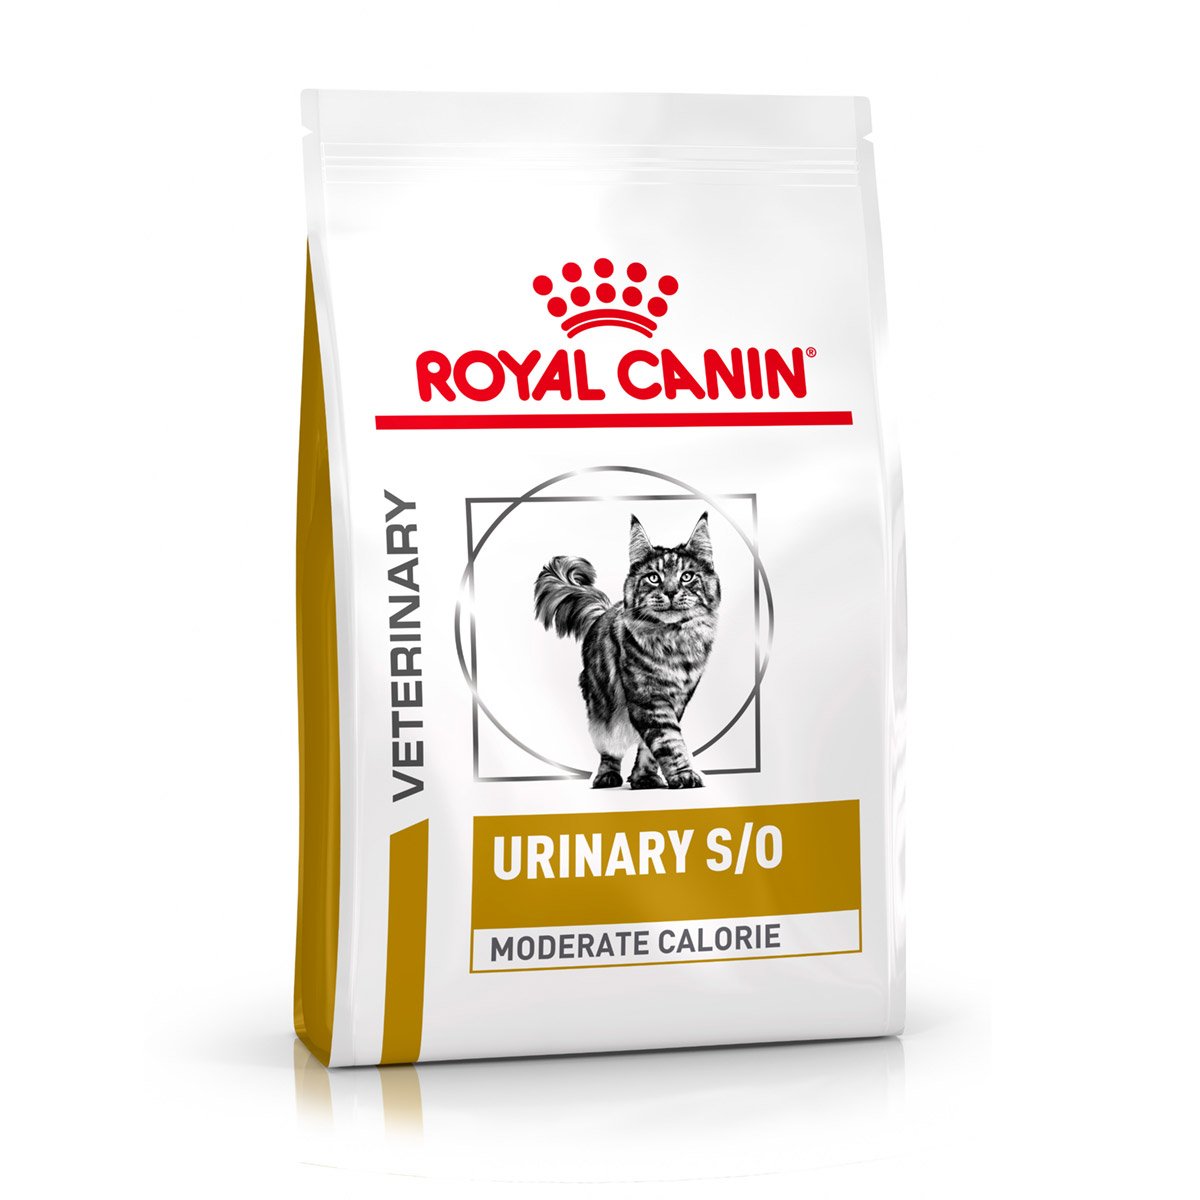 ROYAL CANIN® Veterinary URINARY S/O MODERATE CALORIE Trockenfutter für Katzen 1,5kg